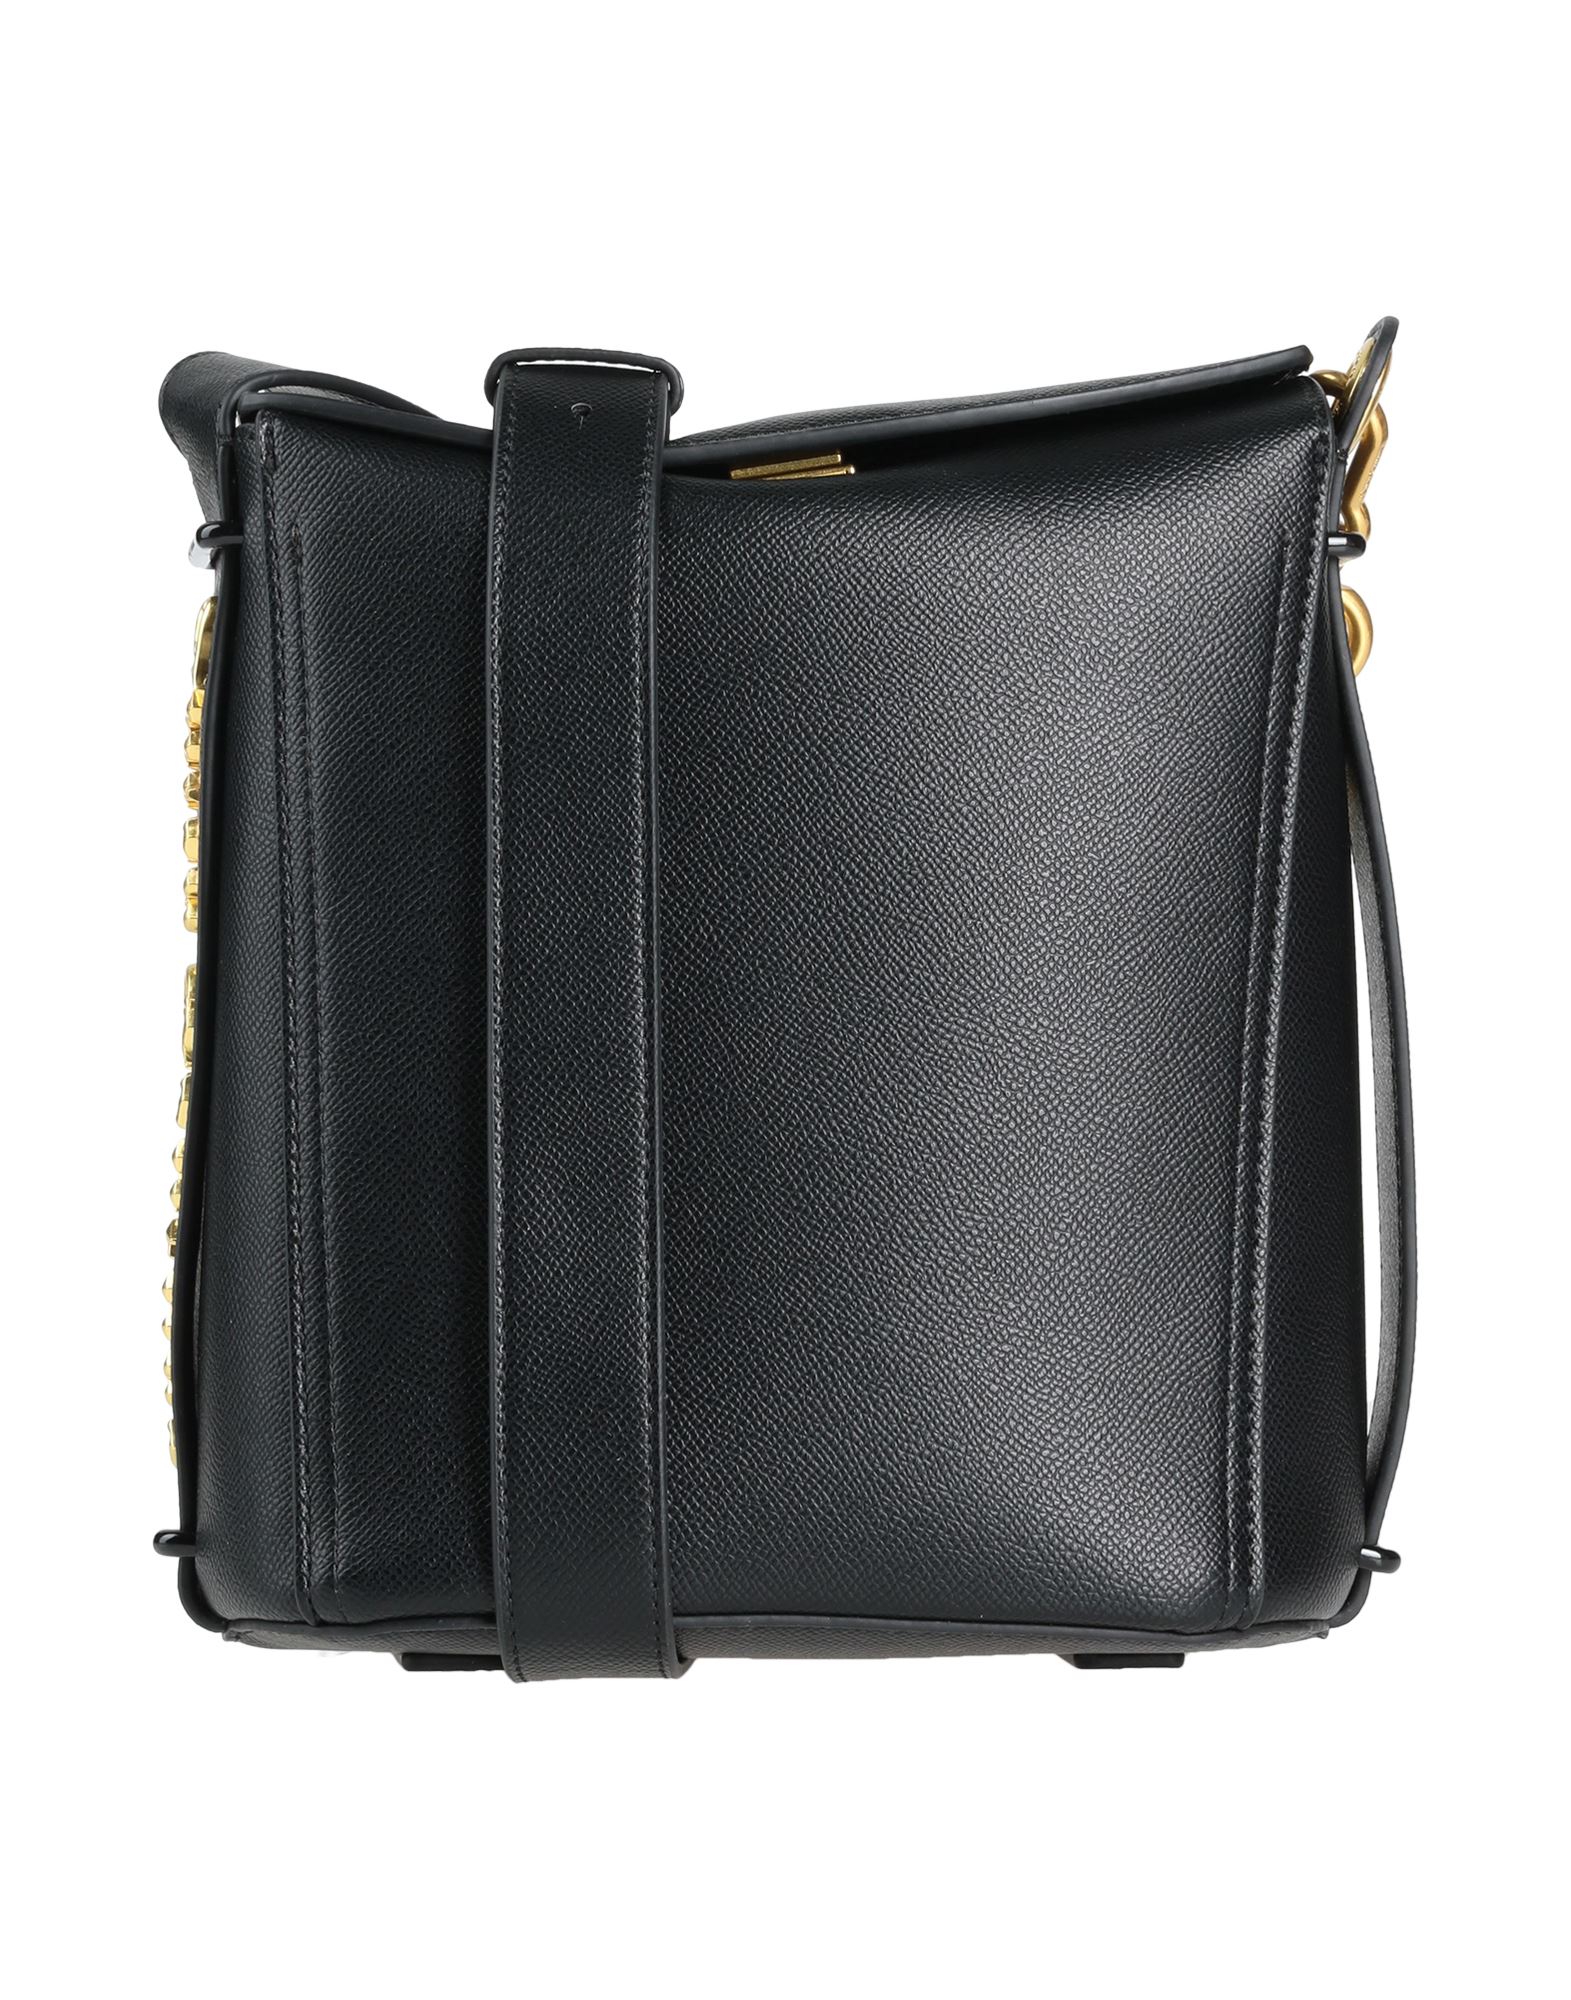 Juicy Couture Handbags In Black